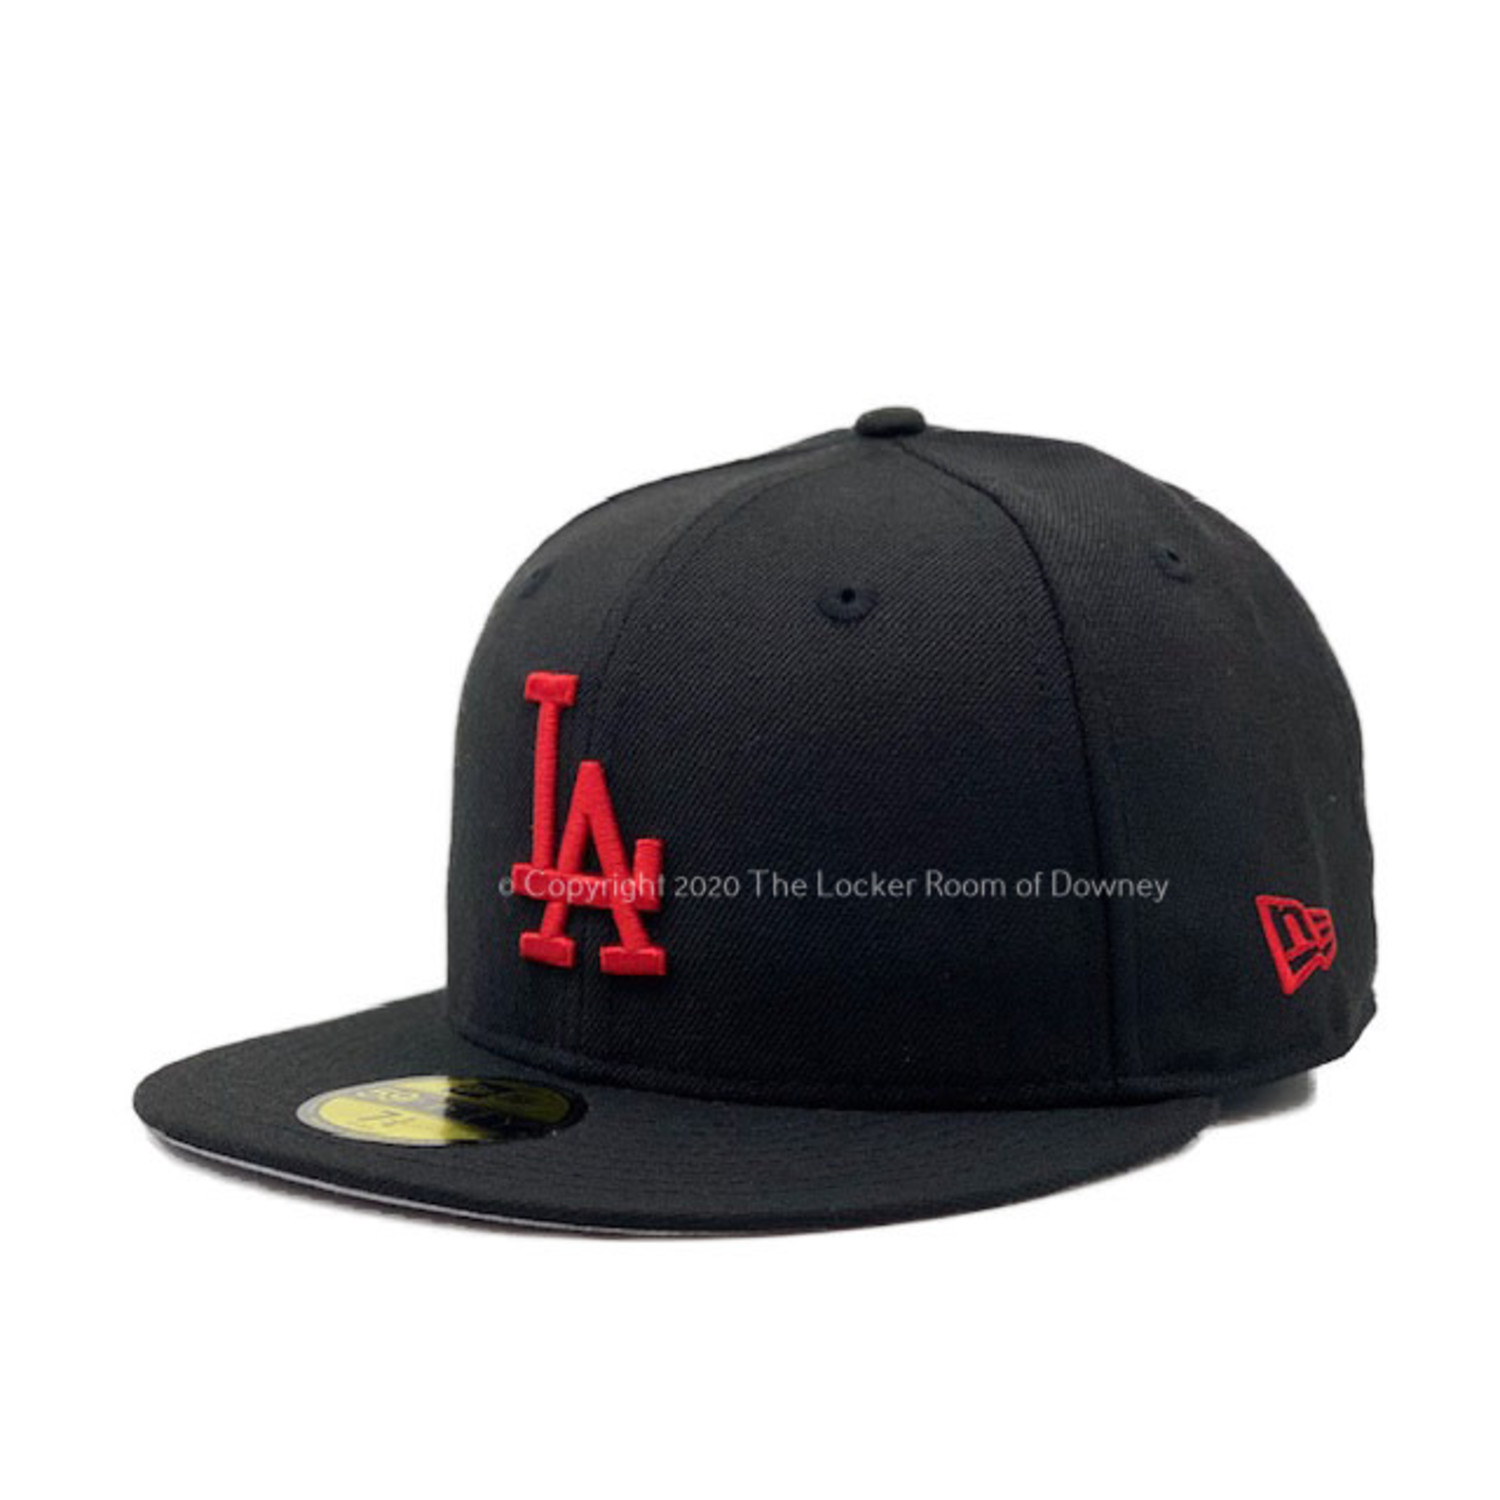 LA Dodgers P/O Black w/Red LA - The Locker Room of Downey